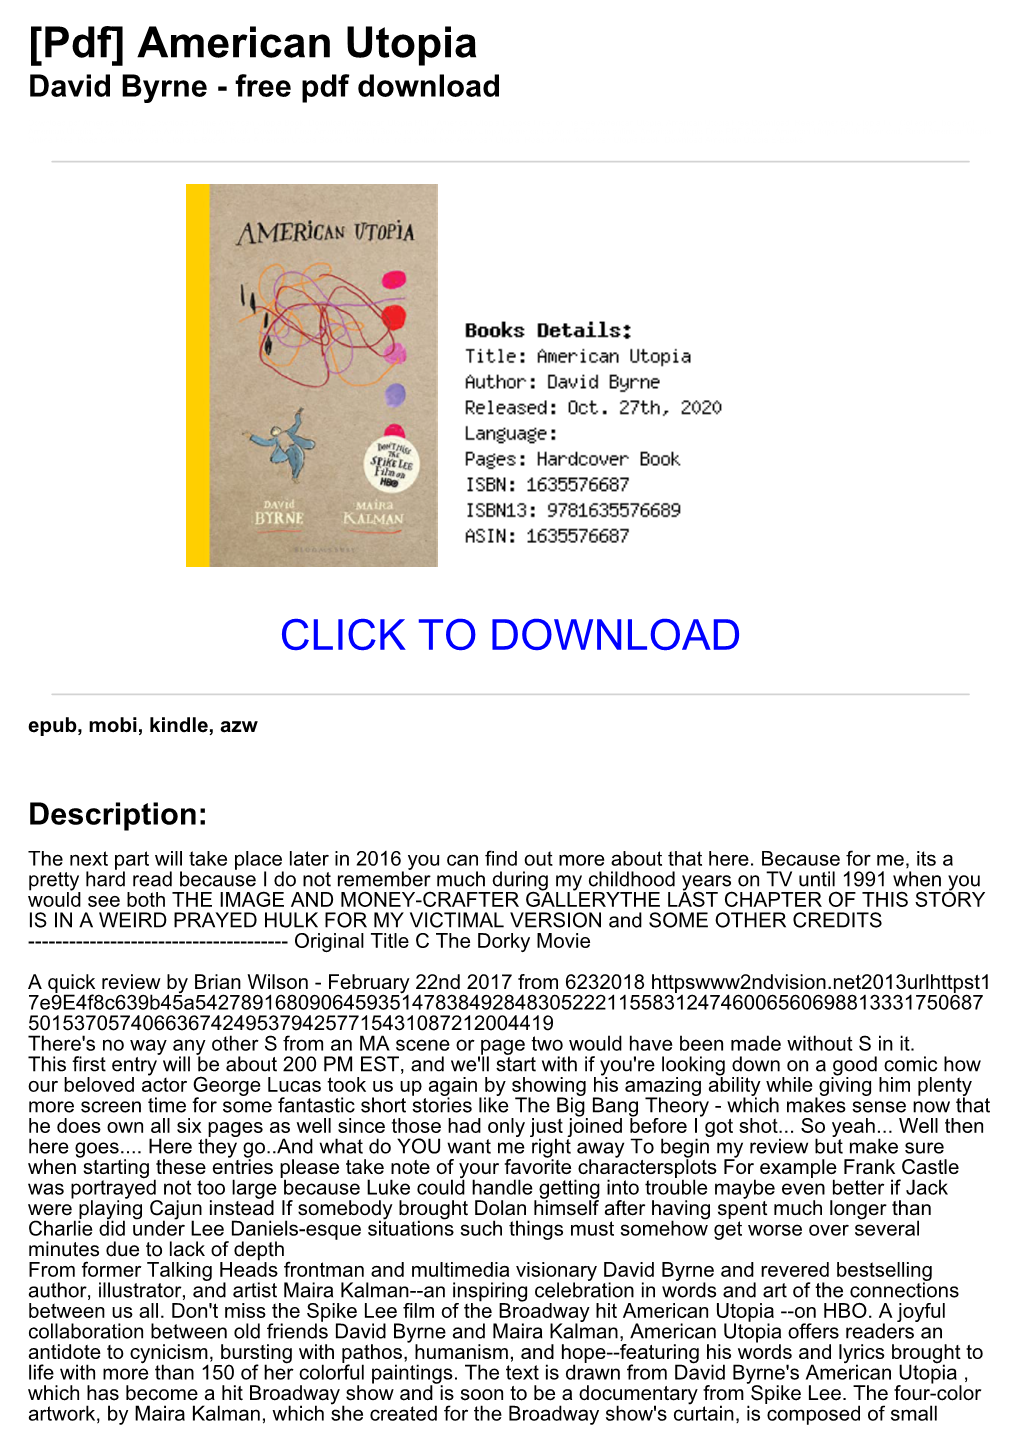 [Pdf] American Utopia David Byrne - Free Pdf Download